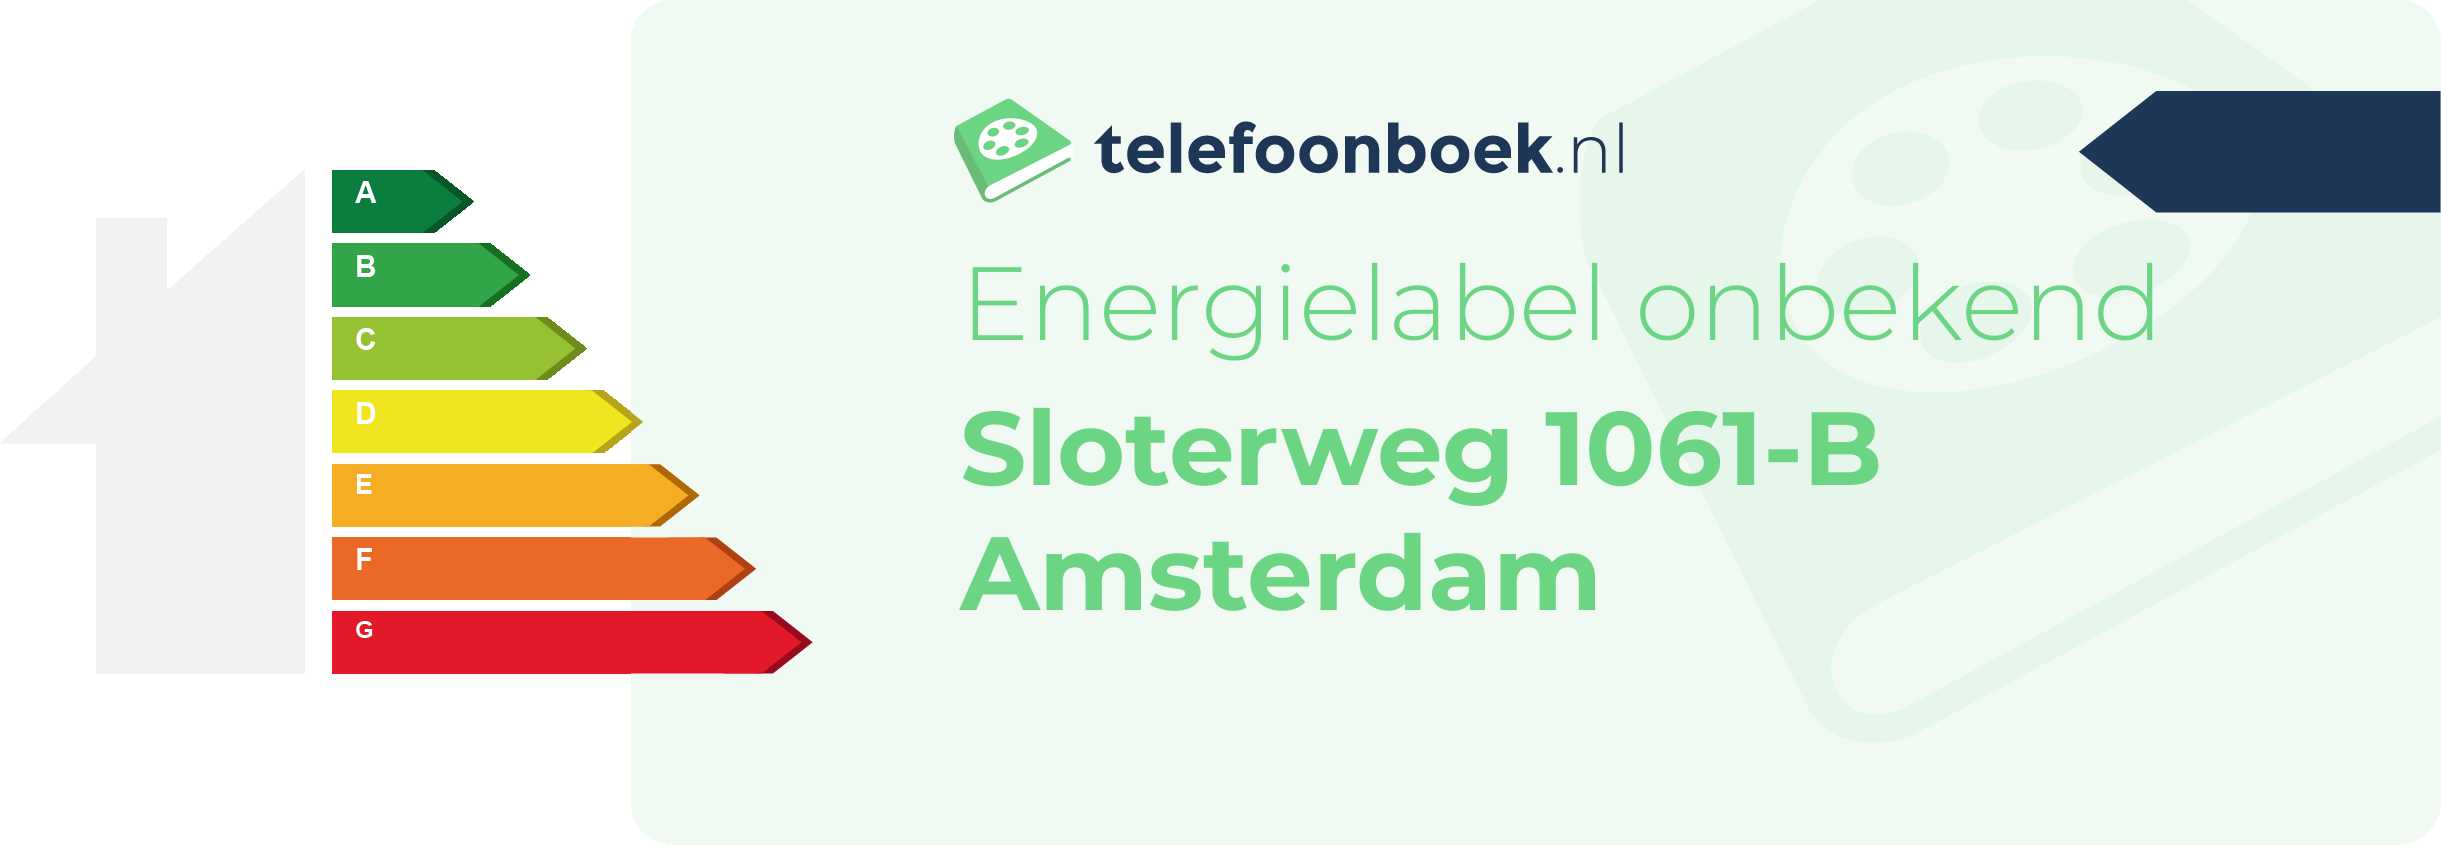 Energielabel Sloterweg 1061-B Amsterdam